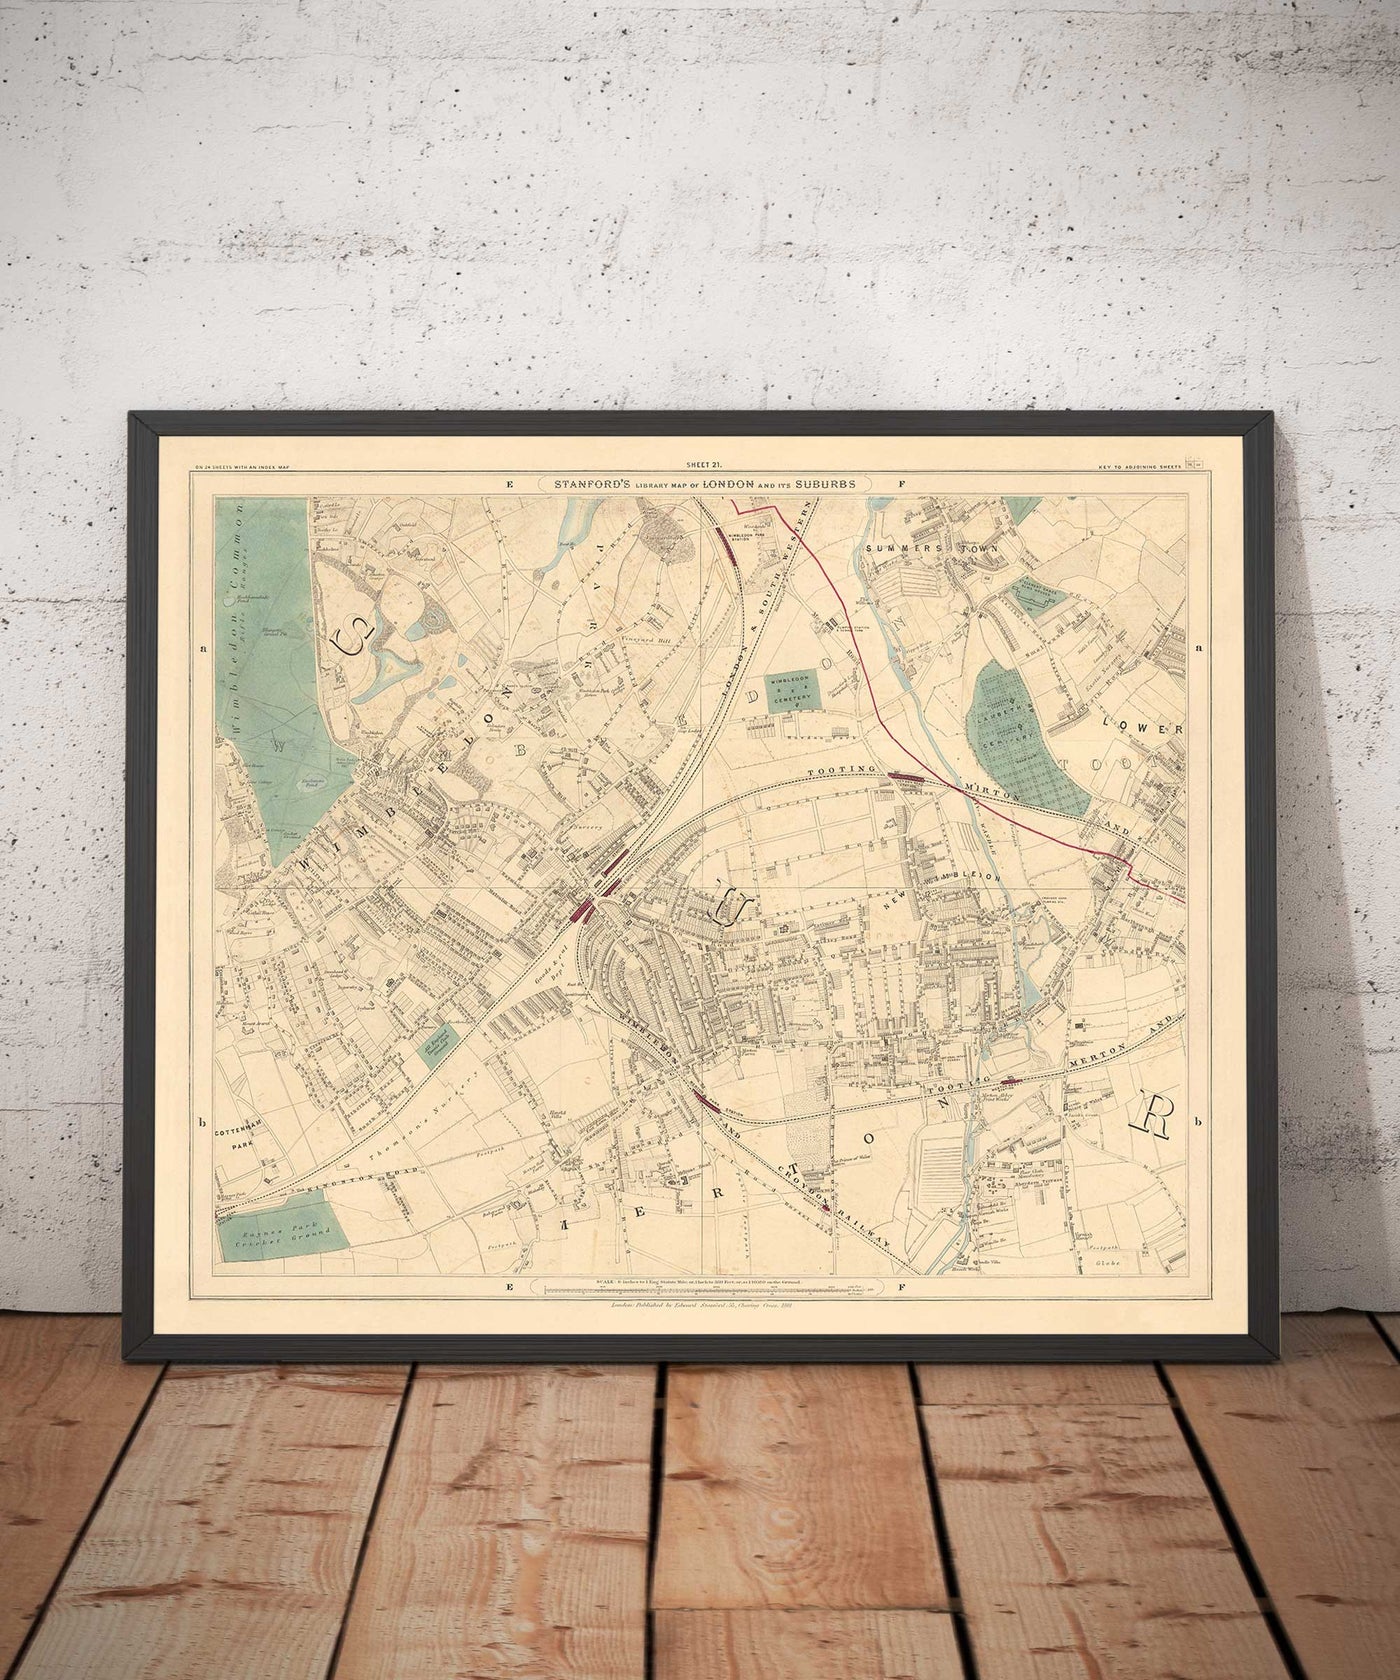 Antiguo mapa en color del suroeste de Londres, 1891 - Wimbledon, Merton, Summerstown - SW19, SW17 SW20